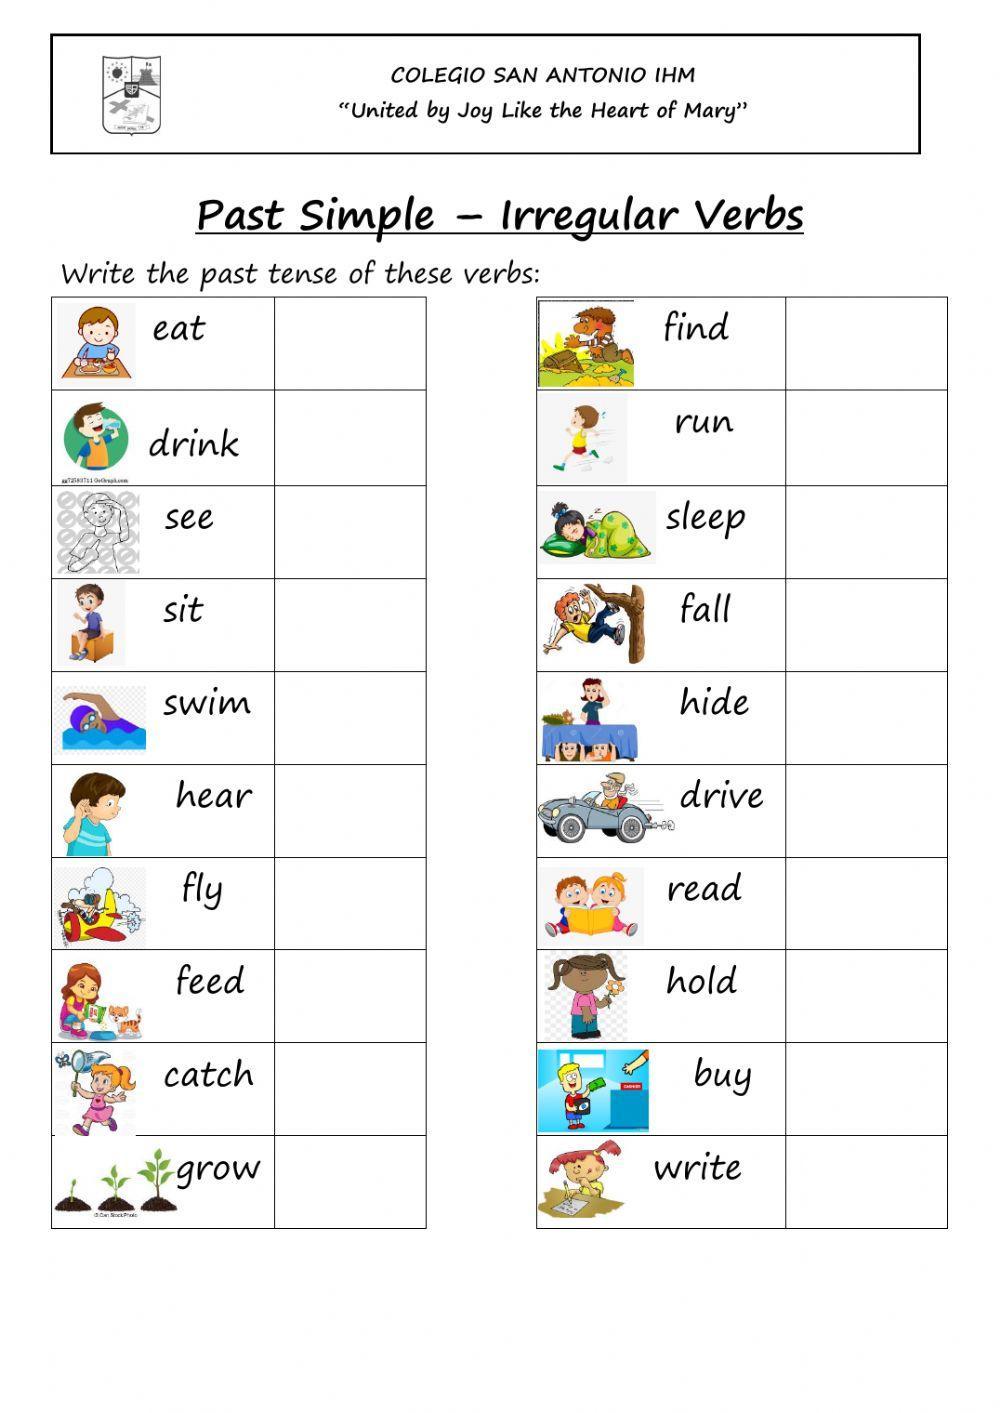 Past Simple - Irregular Verbs